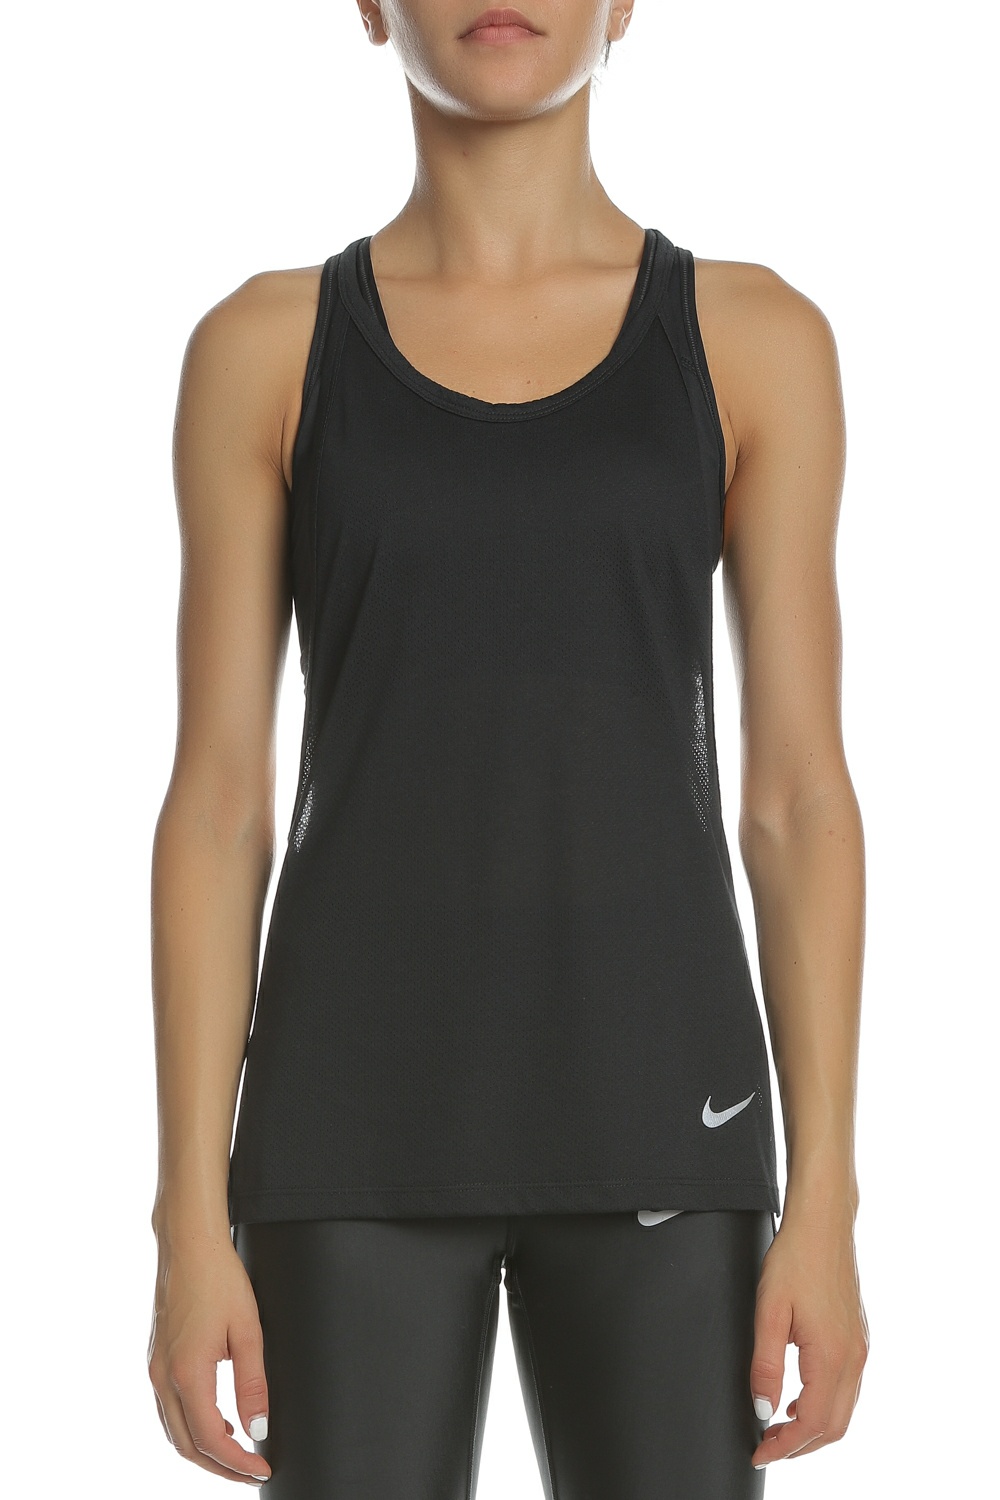 NIKE - Γυναικεία αμάνικη μπλούζα TAILWIND TOP SS COOL LX μαύρη Γυναικεία/Ρούχα/Αθλητικά/T-shirt-Τοπ